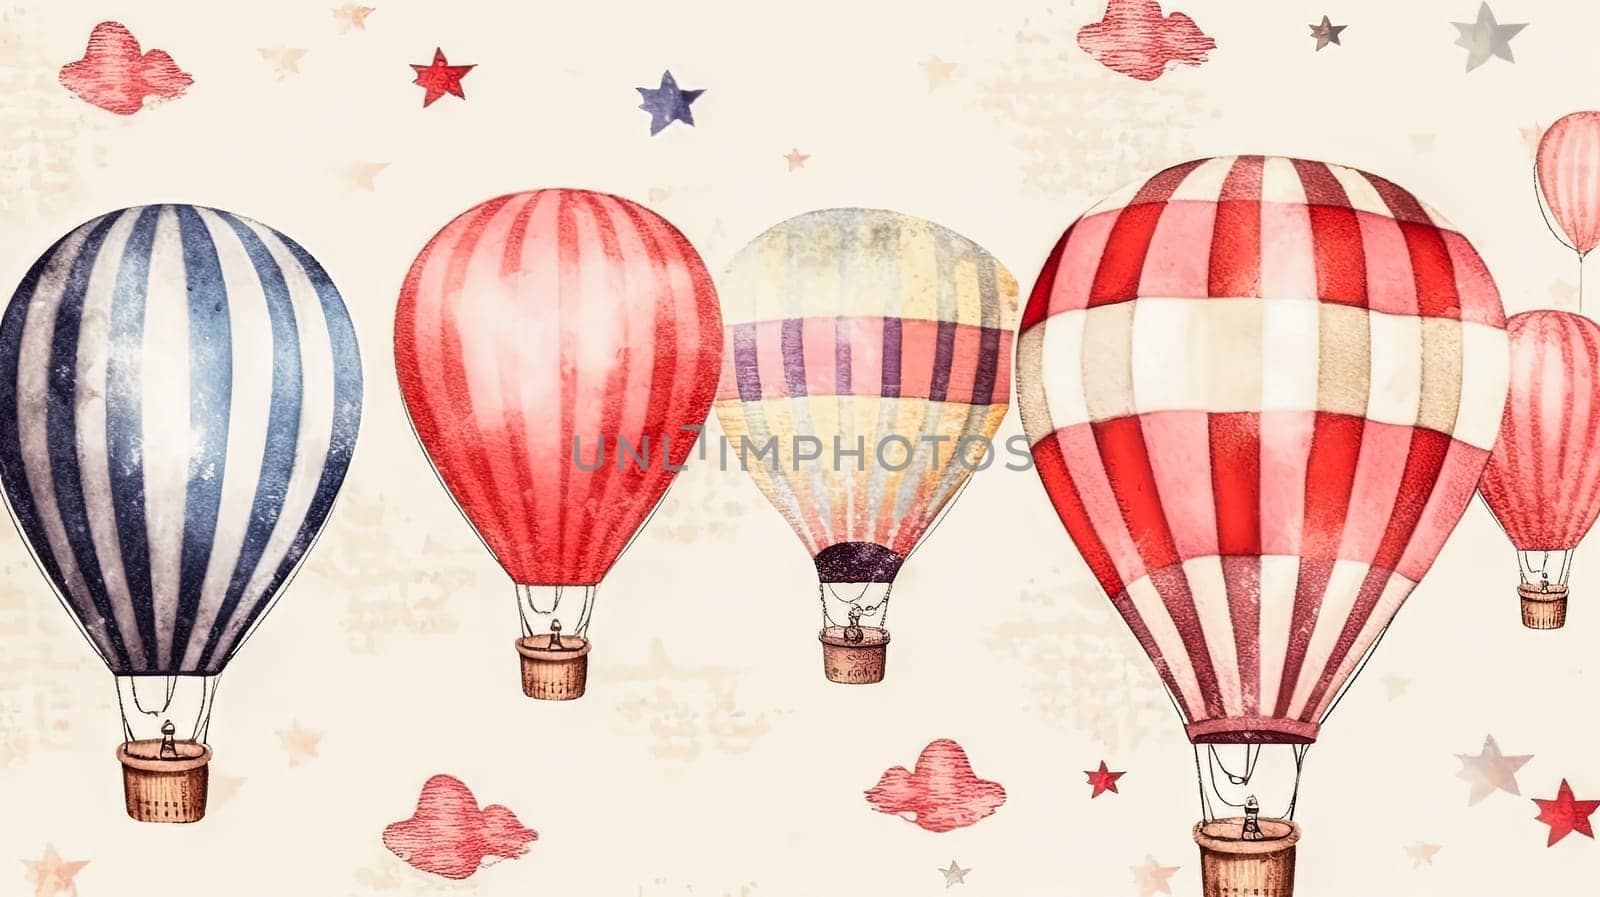 A majestic hot air balloon soars by Alla_Morozova93